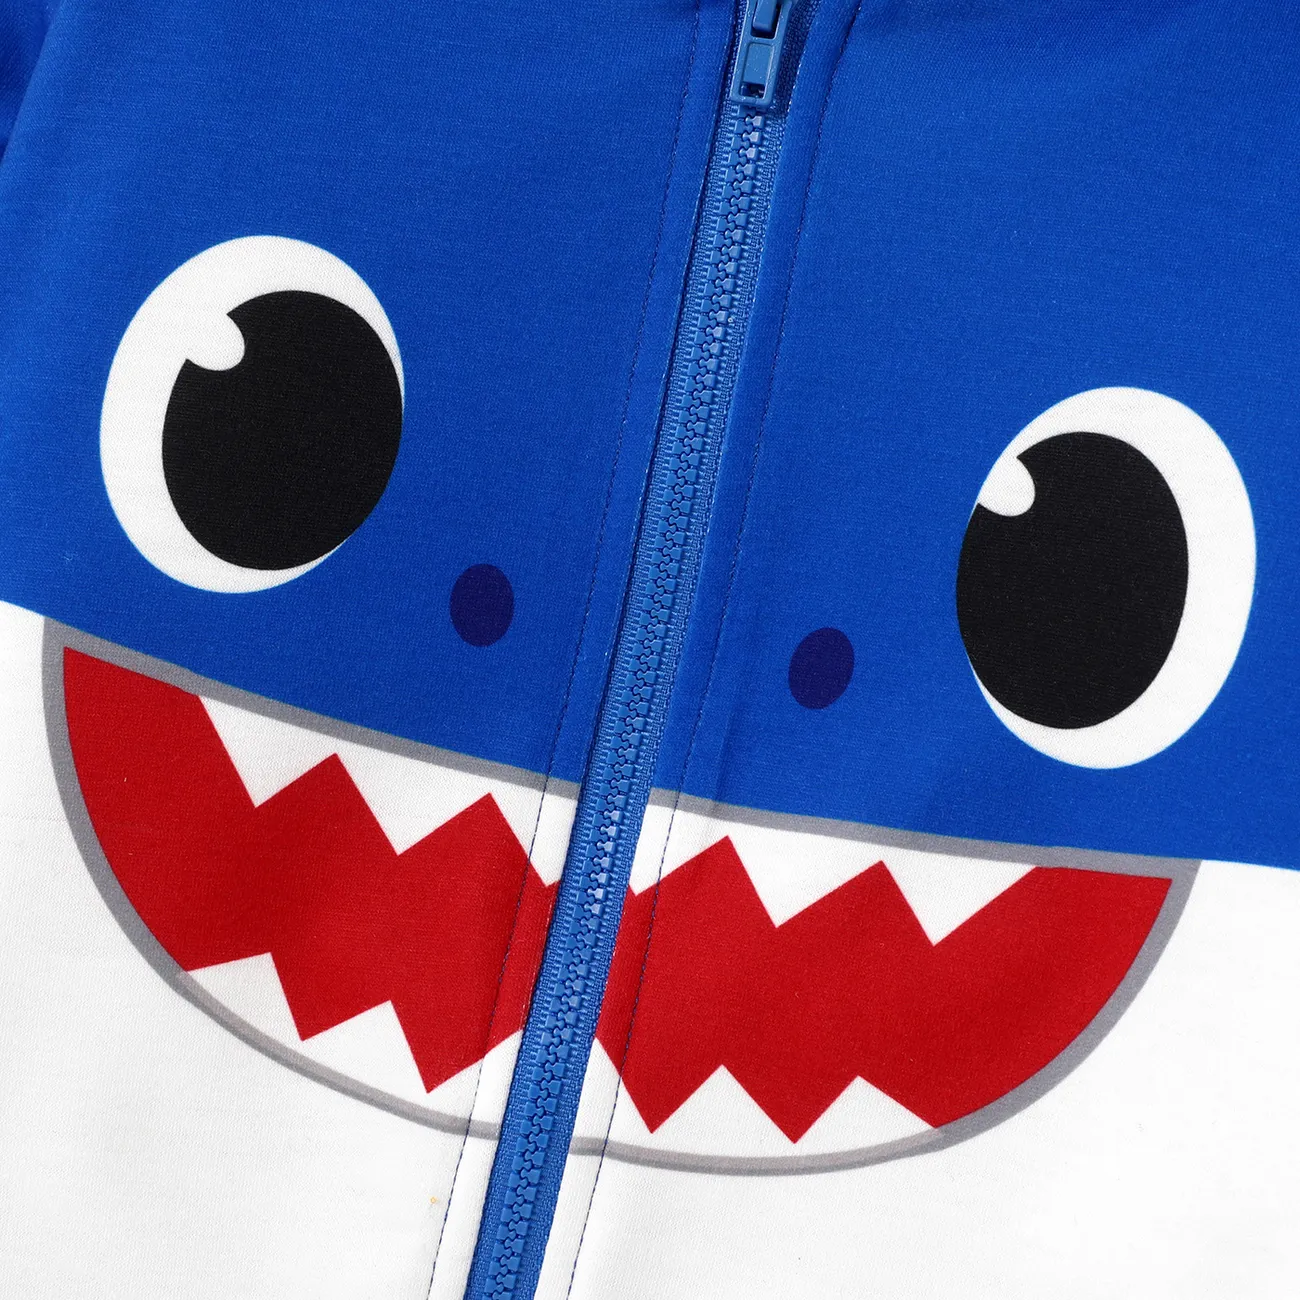 Baby Shark 小童 中性 連帽 前衛 外套 藍色 big image 1